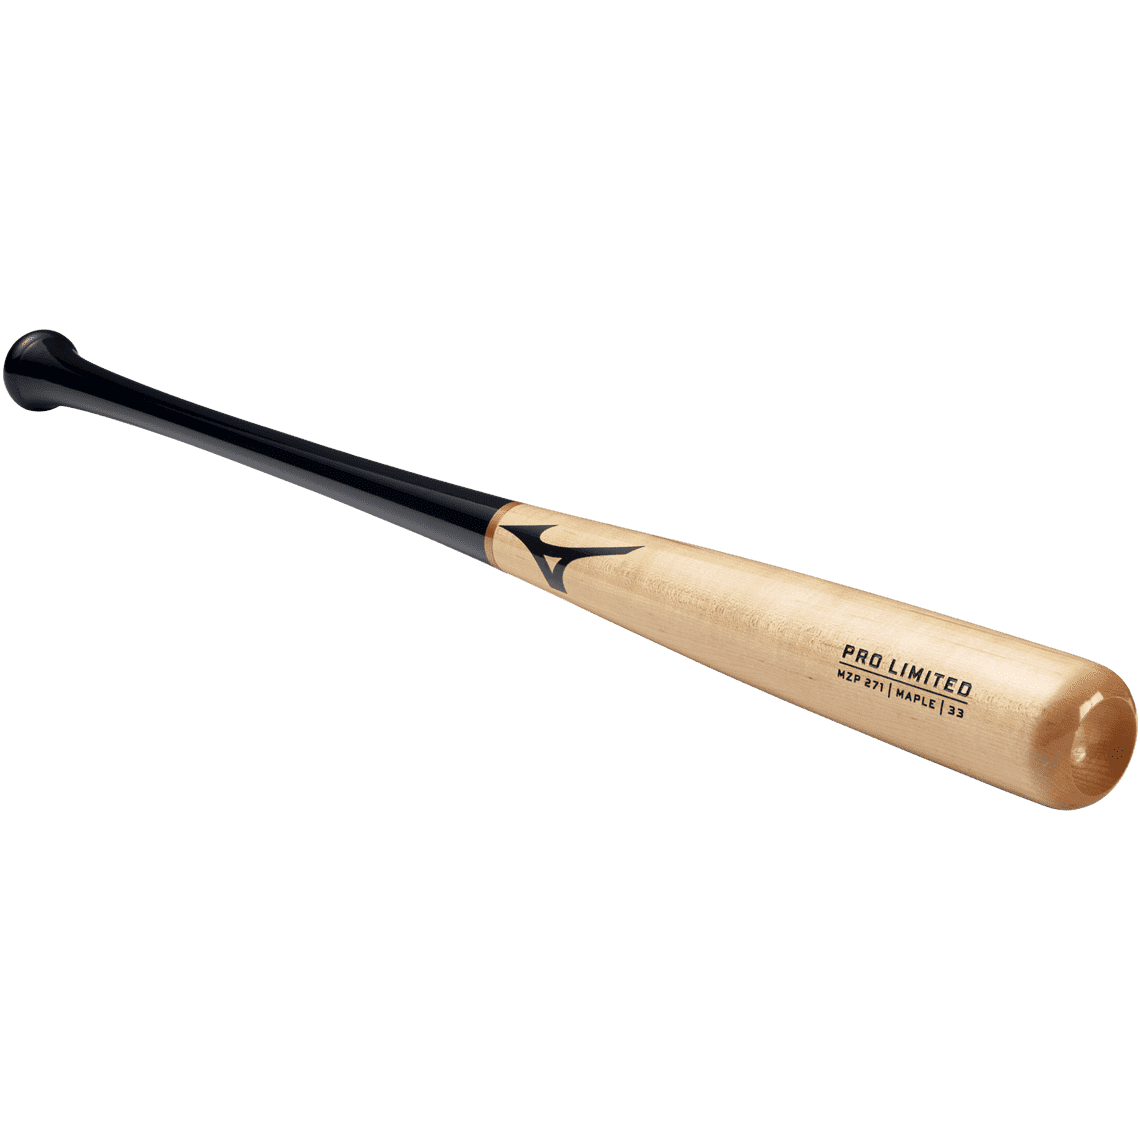 Mizuno Mzp 271 Pro Limited Maple Wood Baseball Bat - Natural Black - HIT a Double